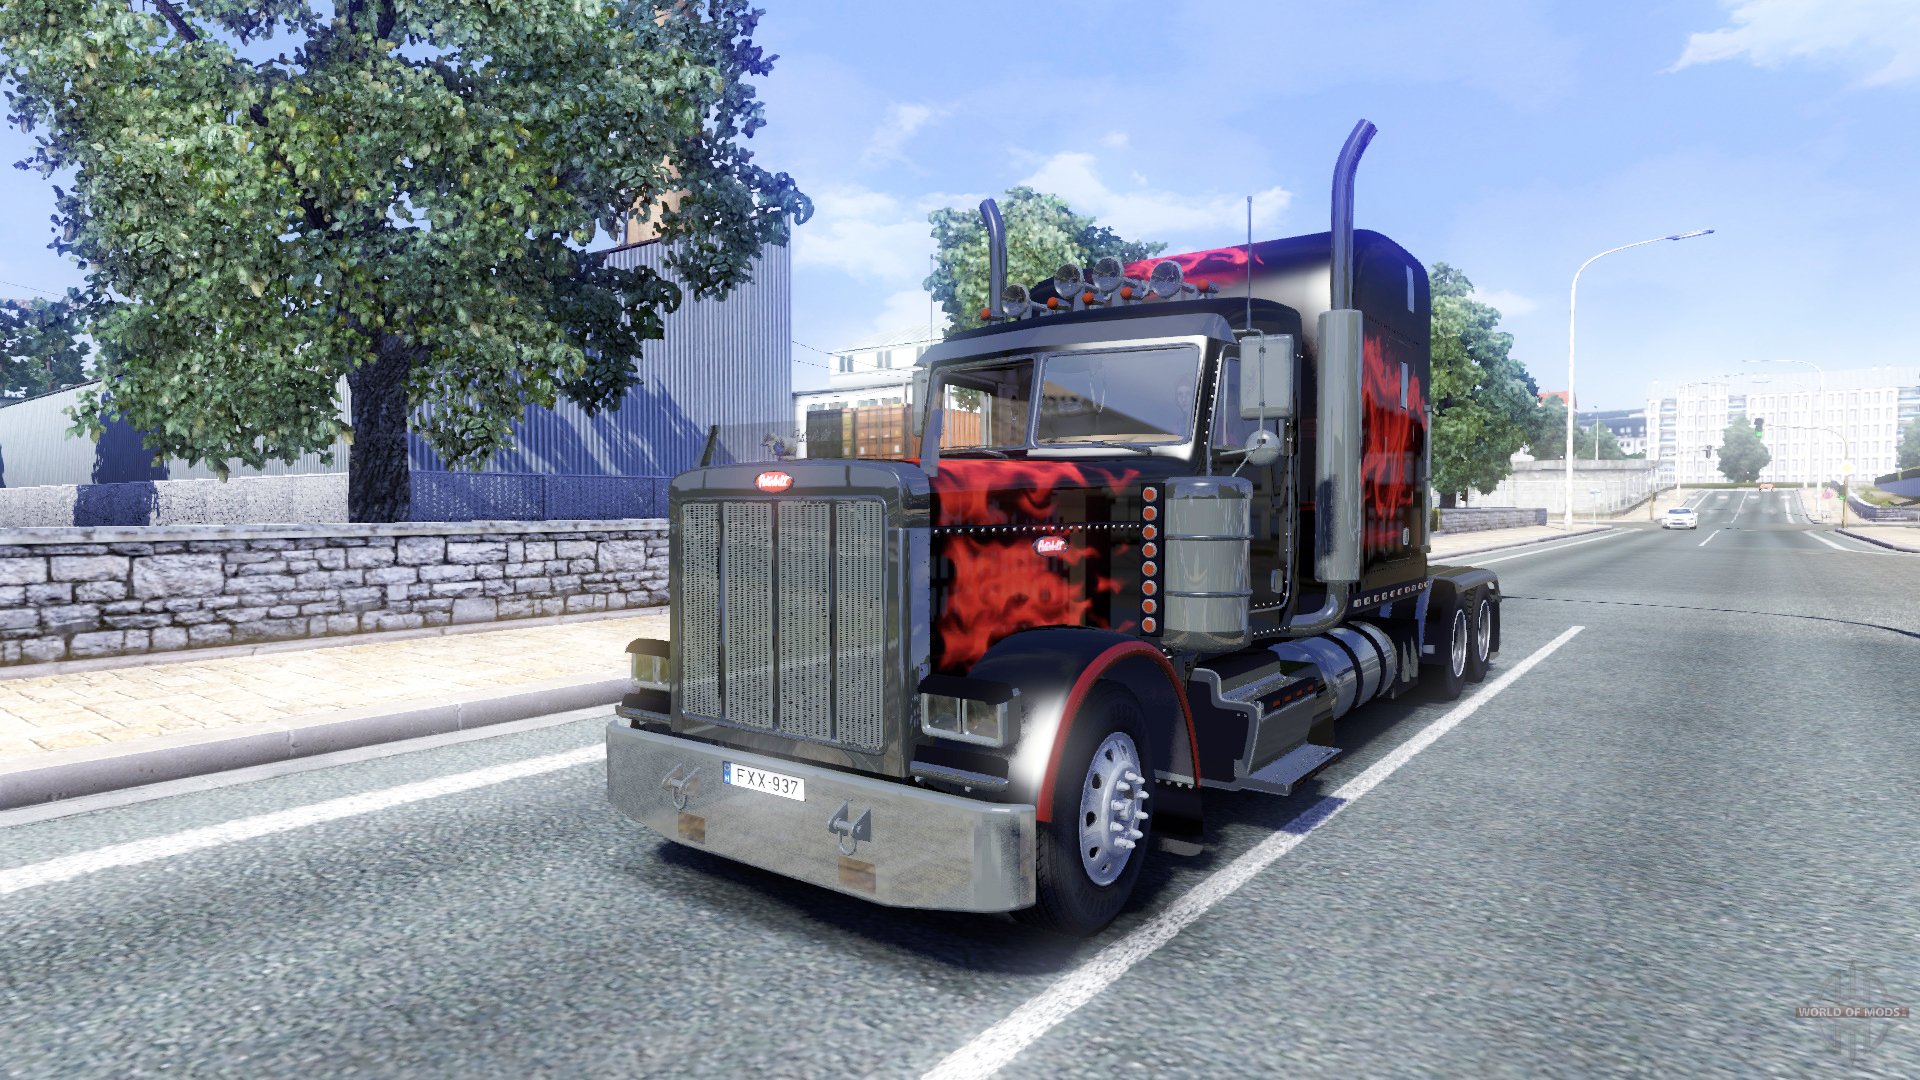 peterbilt, Semi, Tractor, Transport, Truck Wallpaper